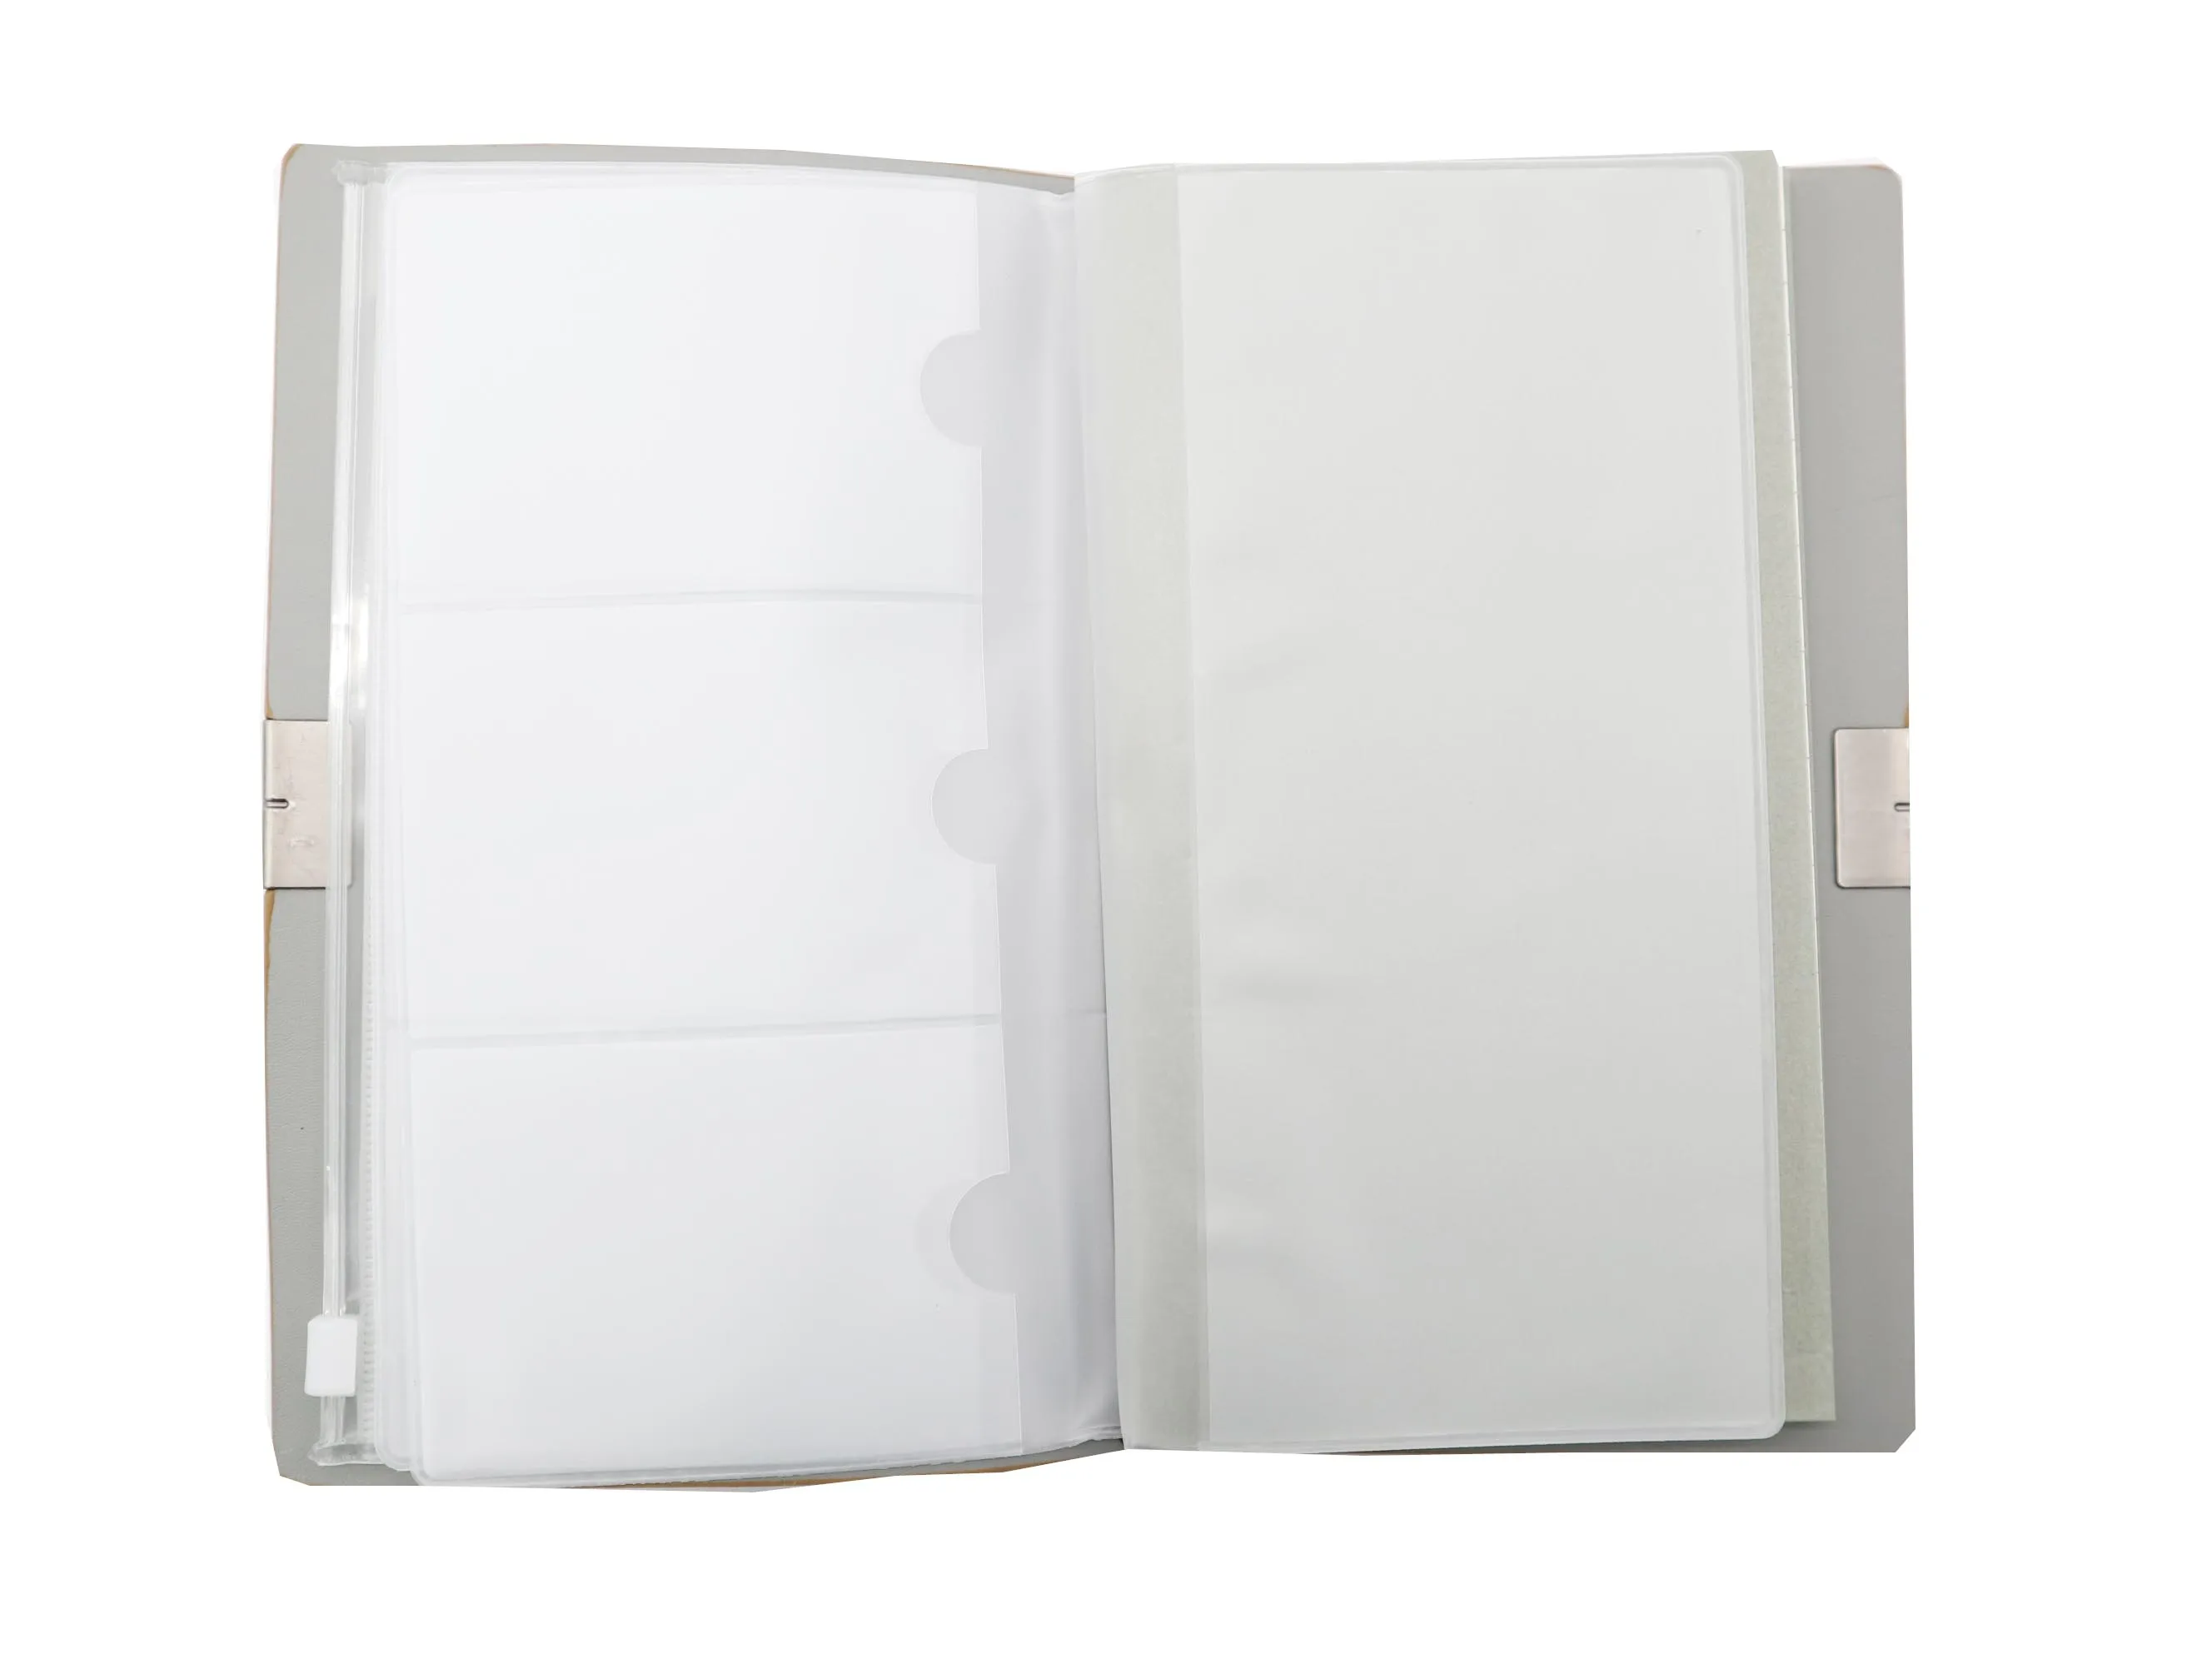 Custom print personal travelers paper notebook with elastic